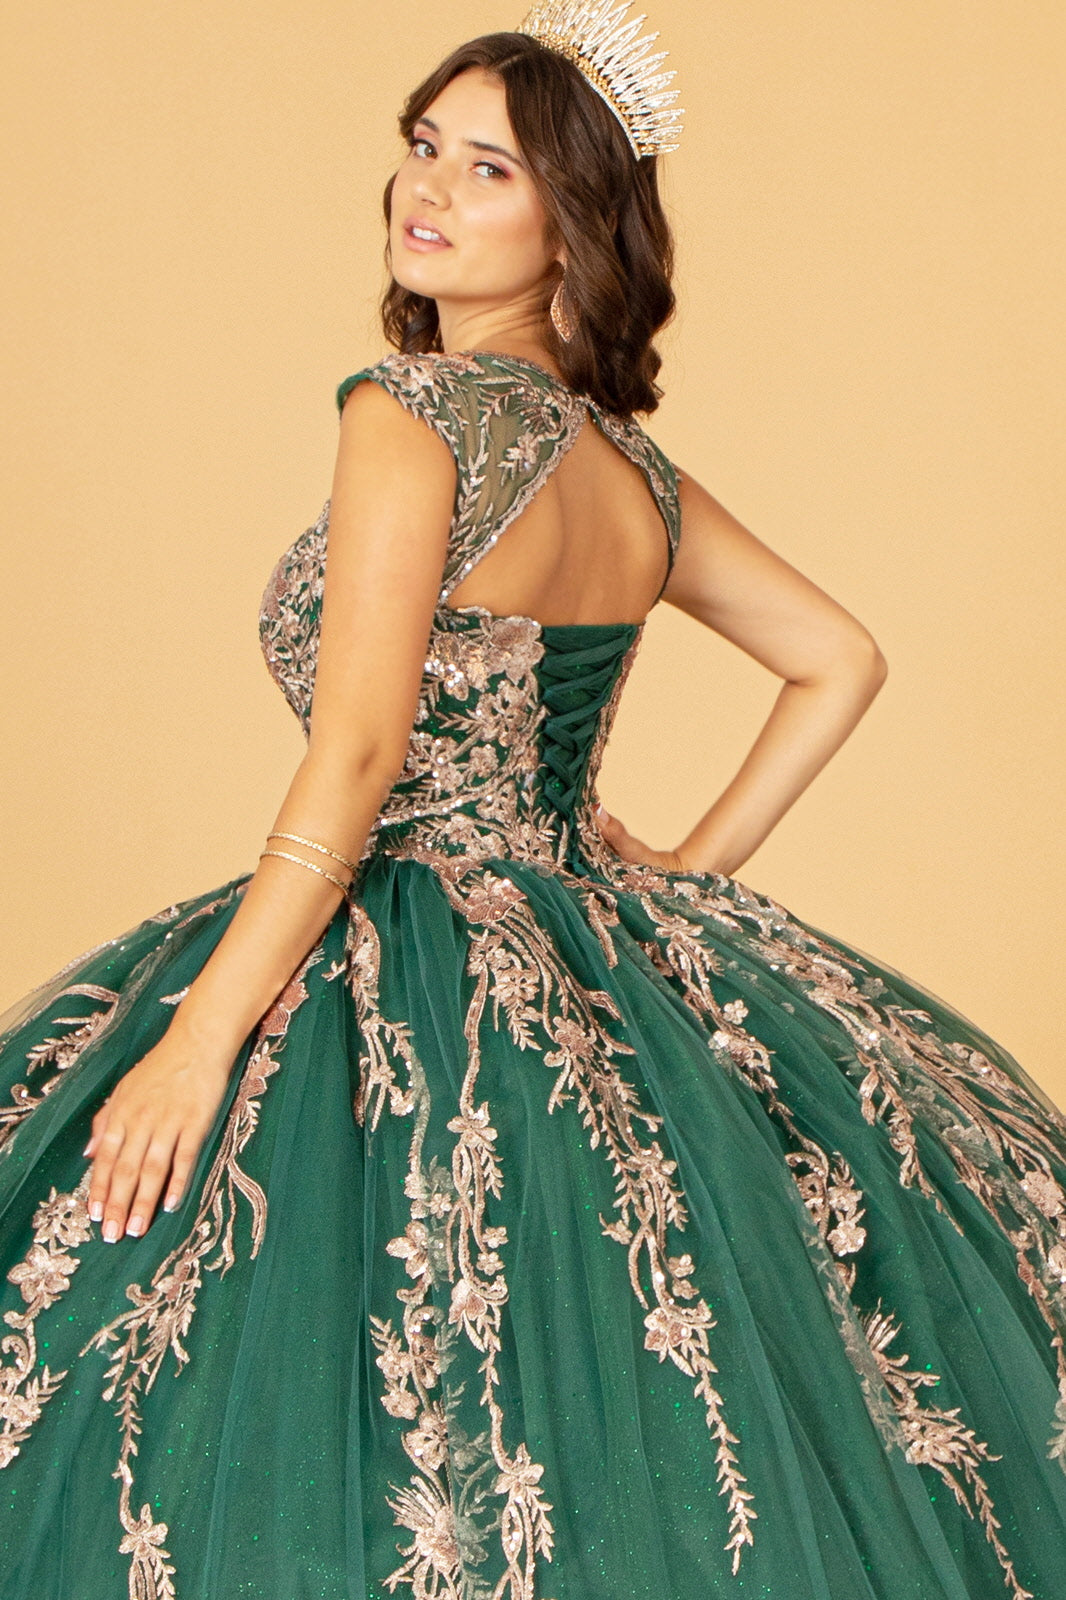 Sequin Glitter Embellished Quinceanera Dress Corset Back-smcdress